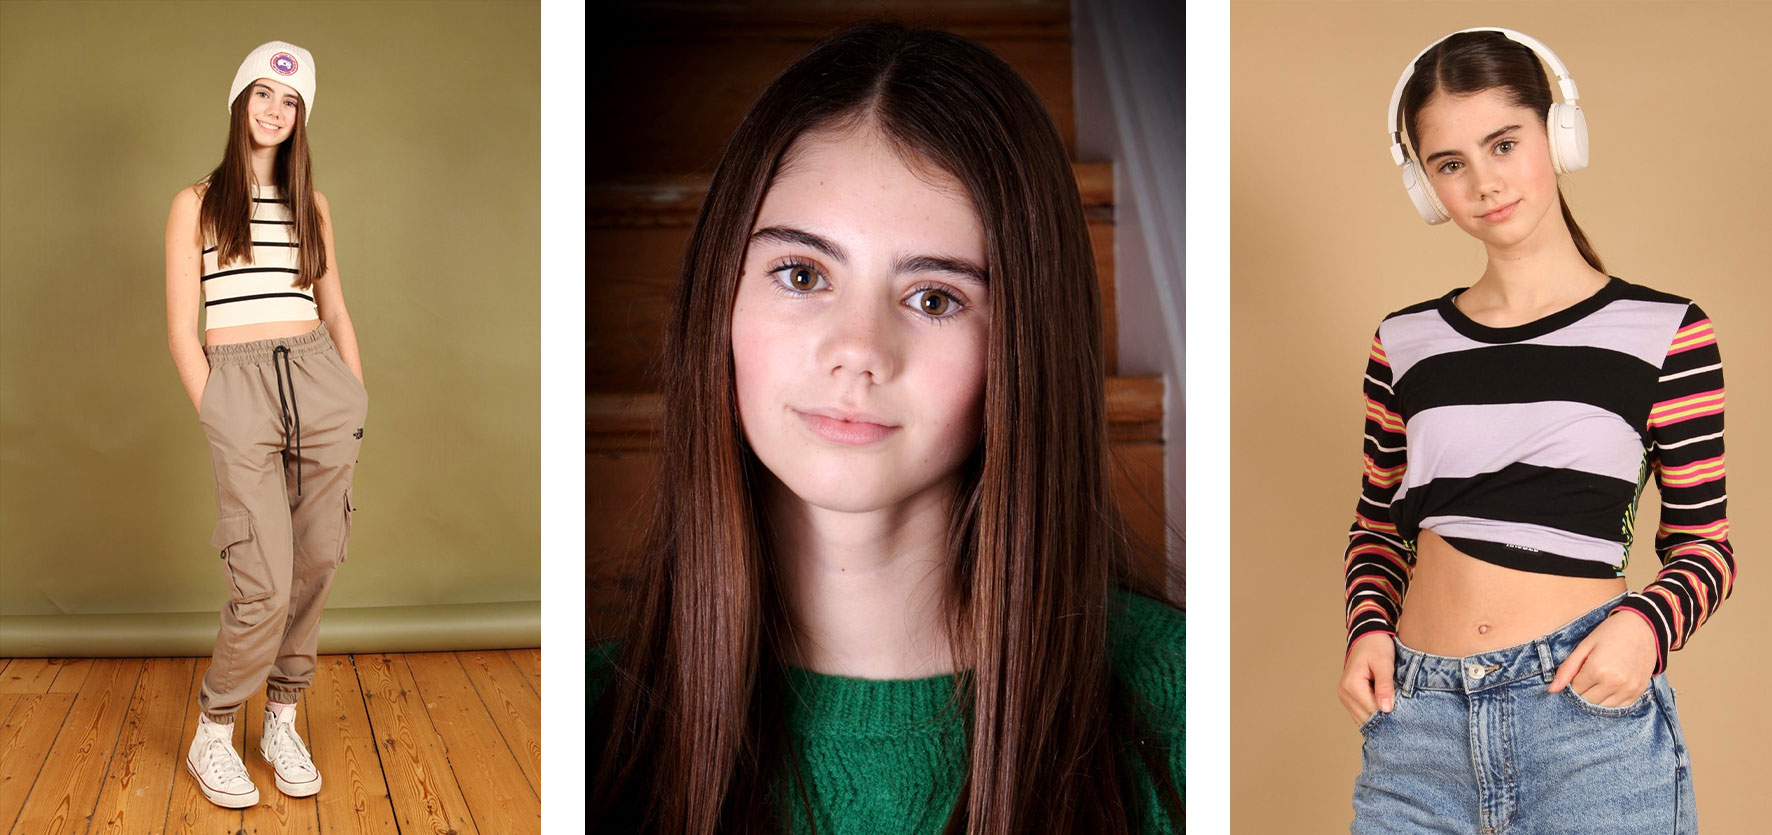 Sandra Reynolds teen model agency shares three photos of new face teen model Eden Jeal-Dunkling